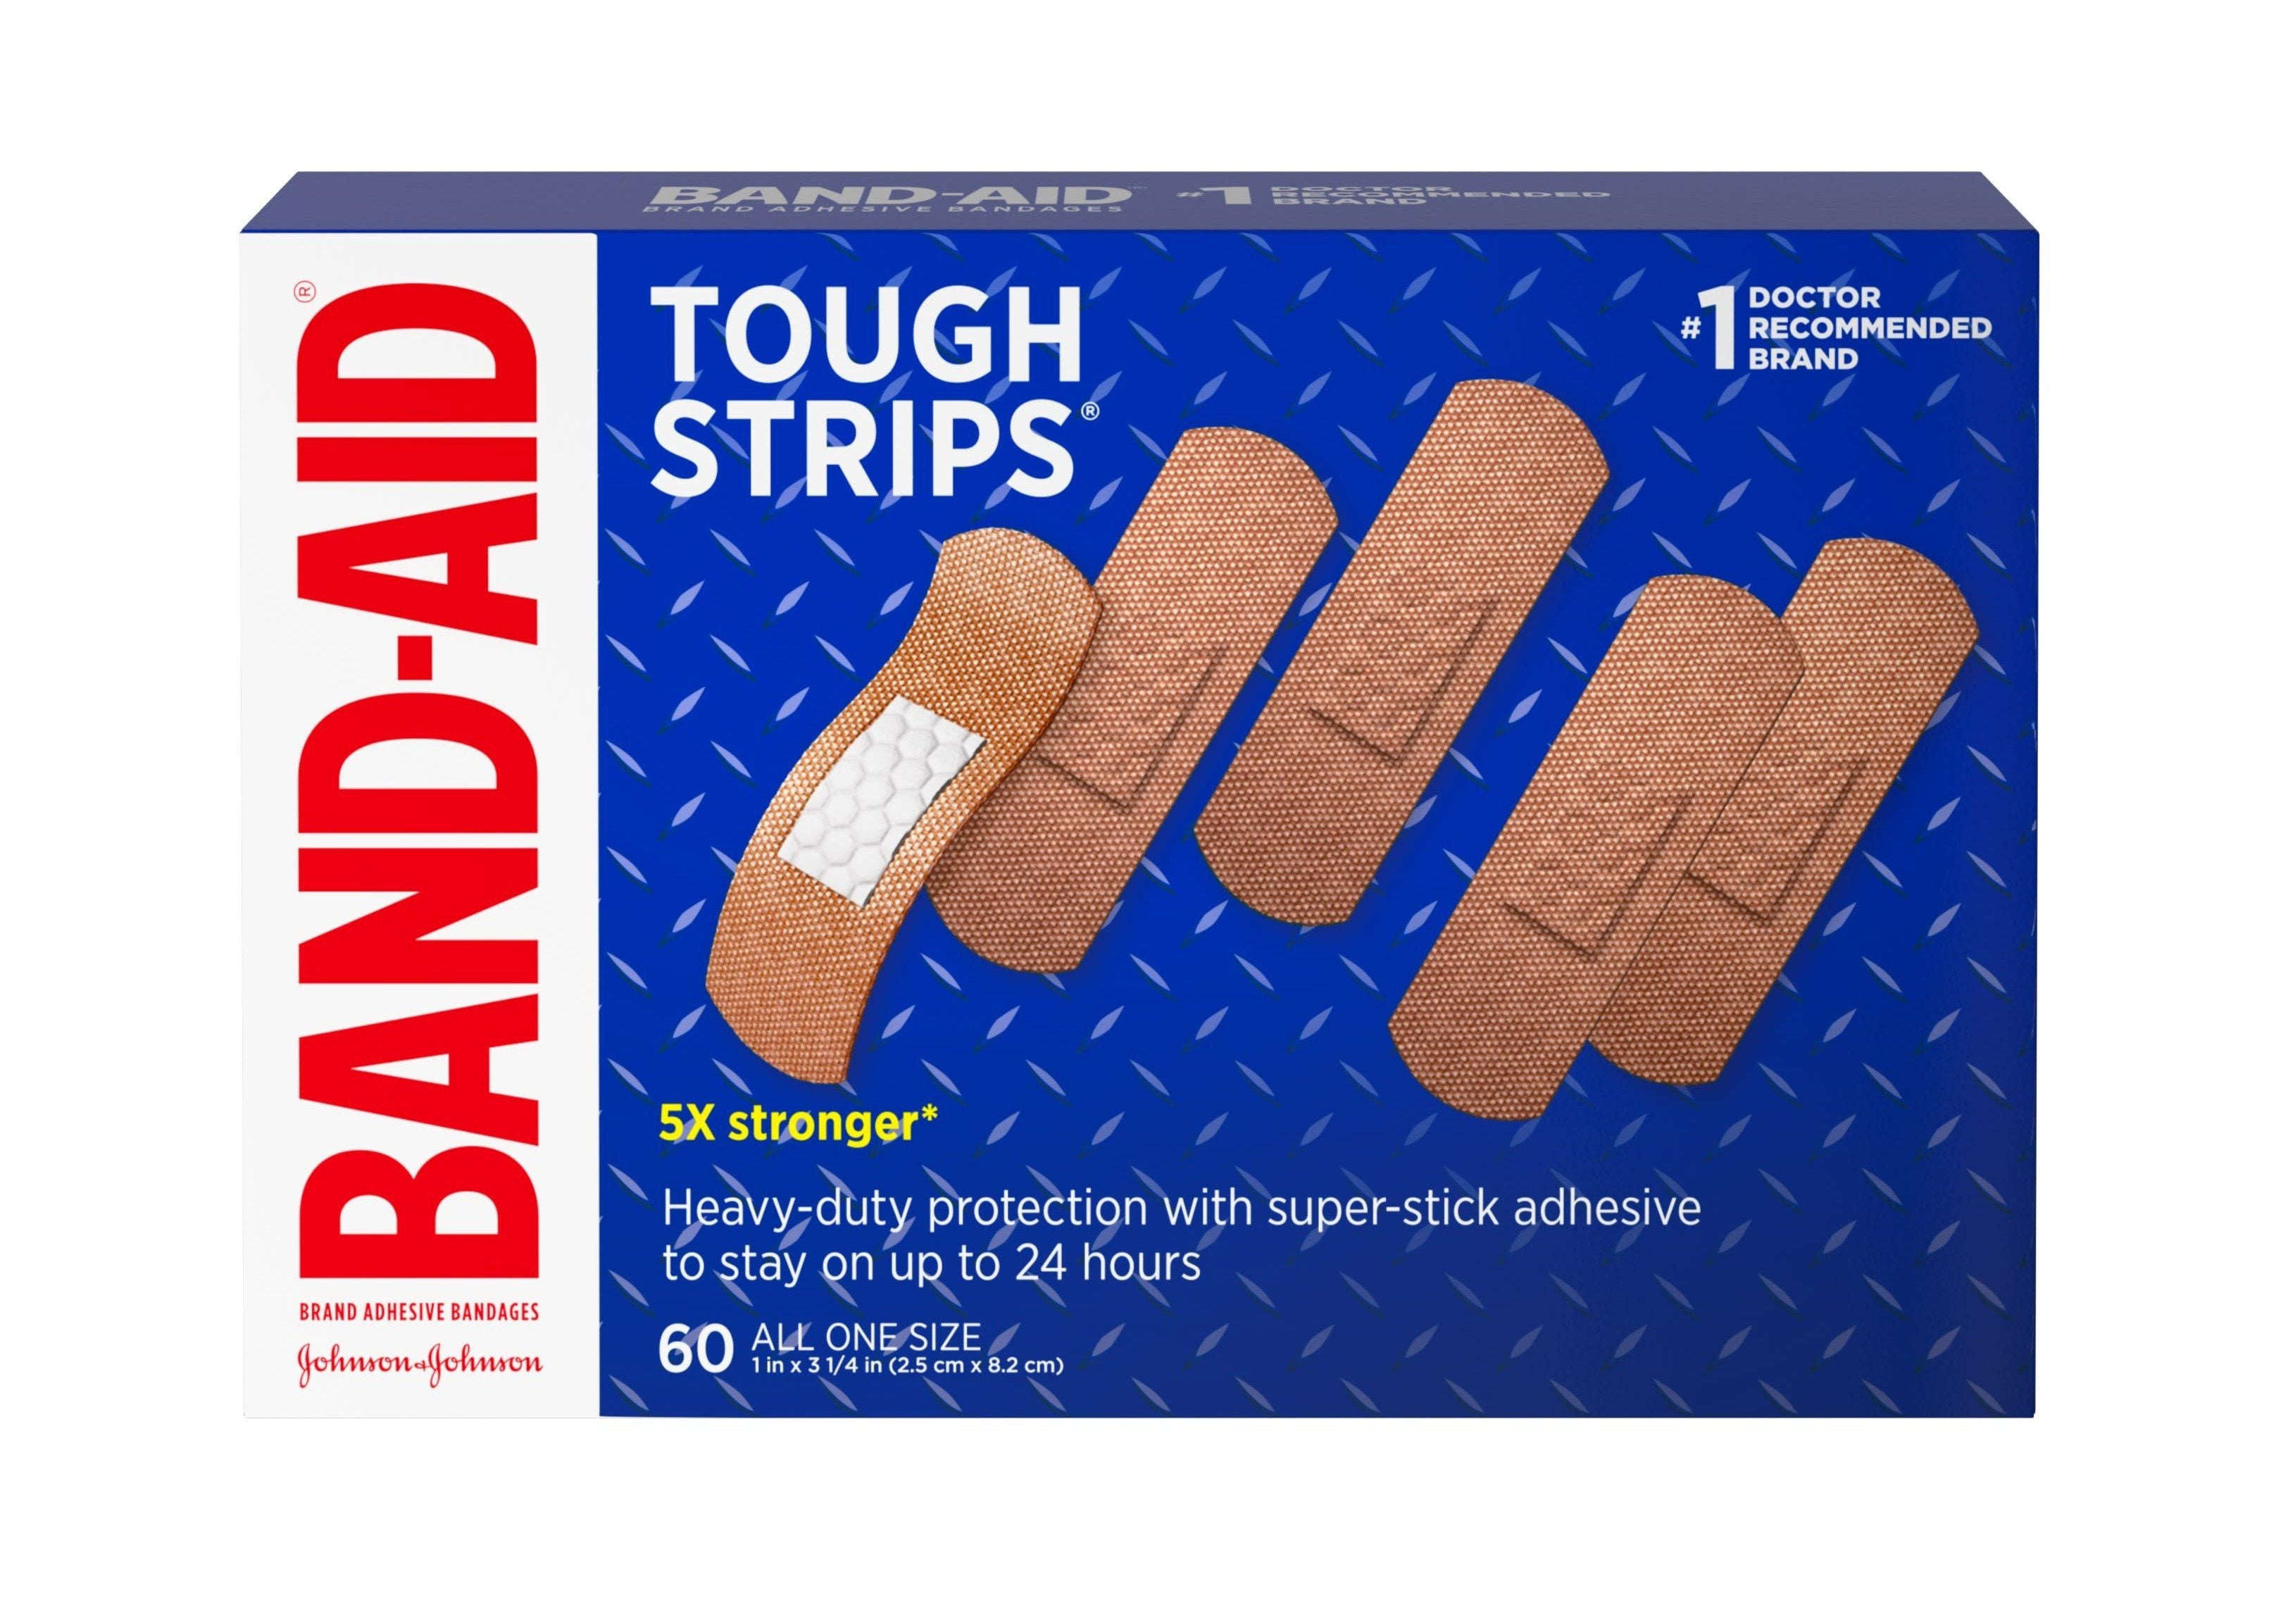 BSN Medical-Jobst - Tensoplast Elastic Adhesive Compression Bandage